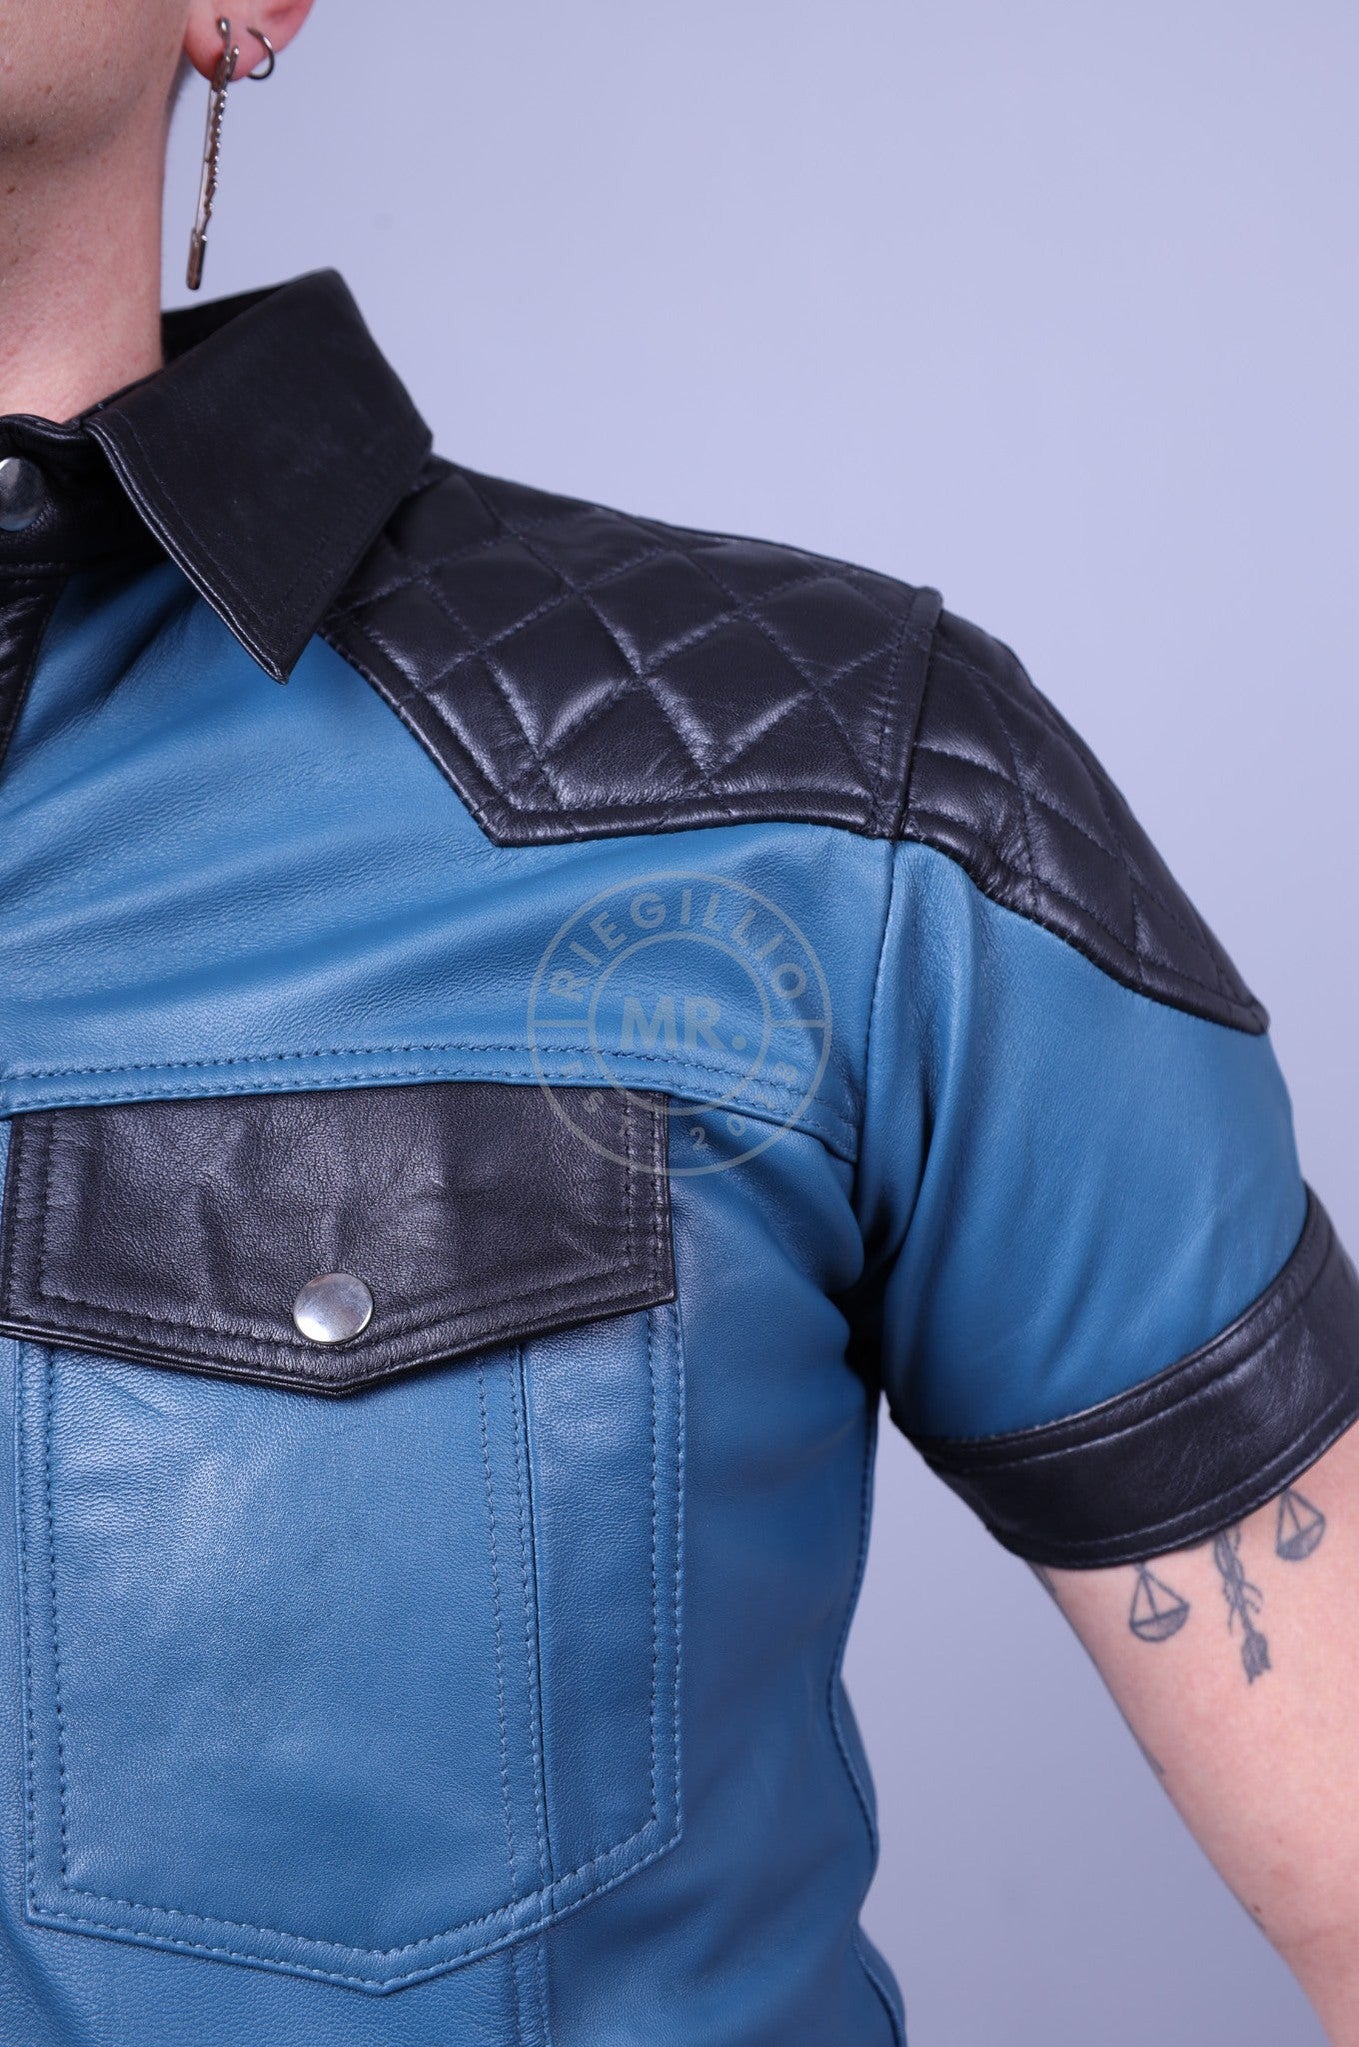 Jeans Blue Leather Shirt with Black Padding-at MR. Riegillio